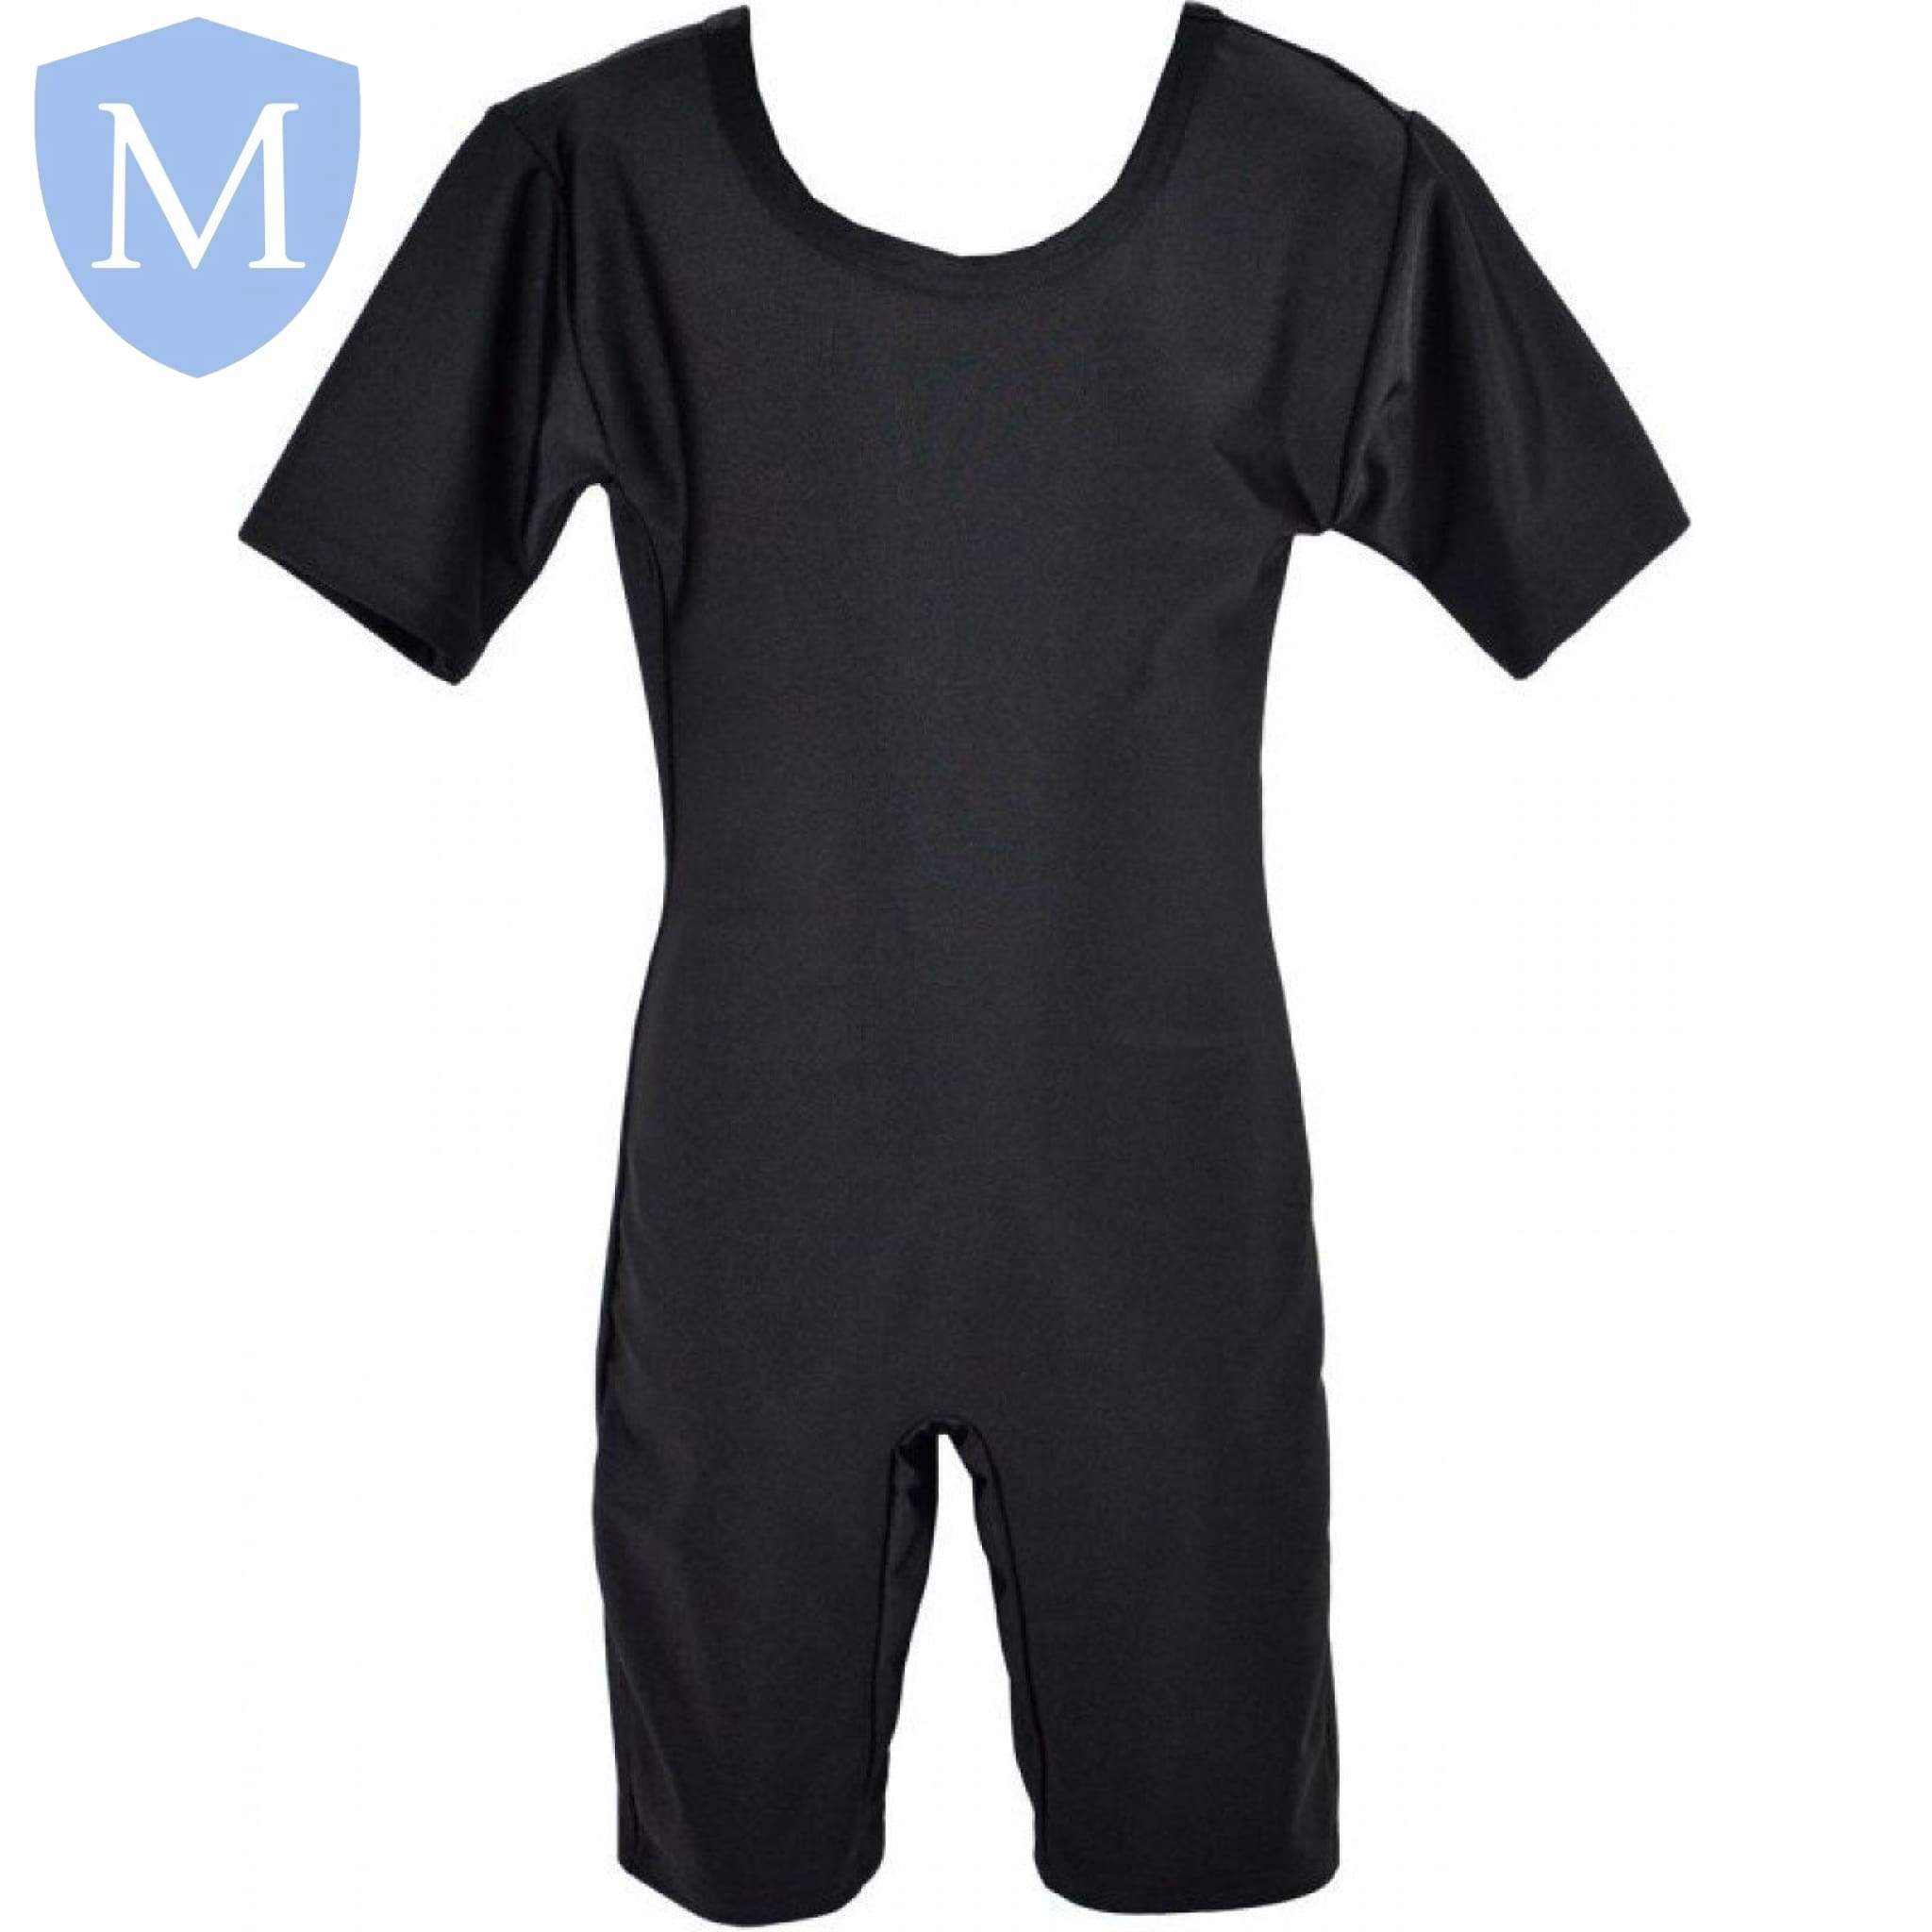 Plain Swimming Costume (3/4) - Black (swimwear) School Uniform